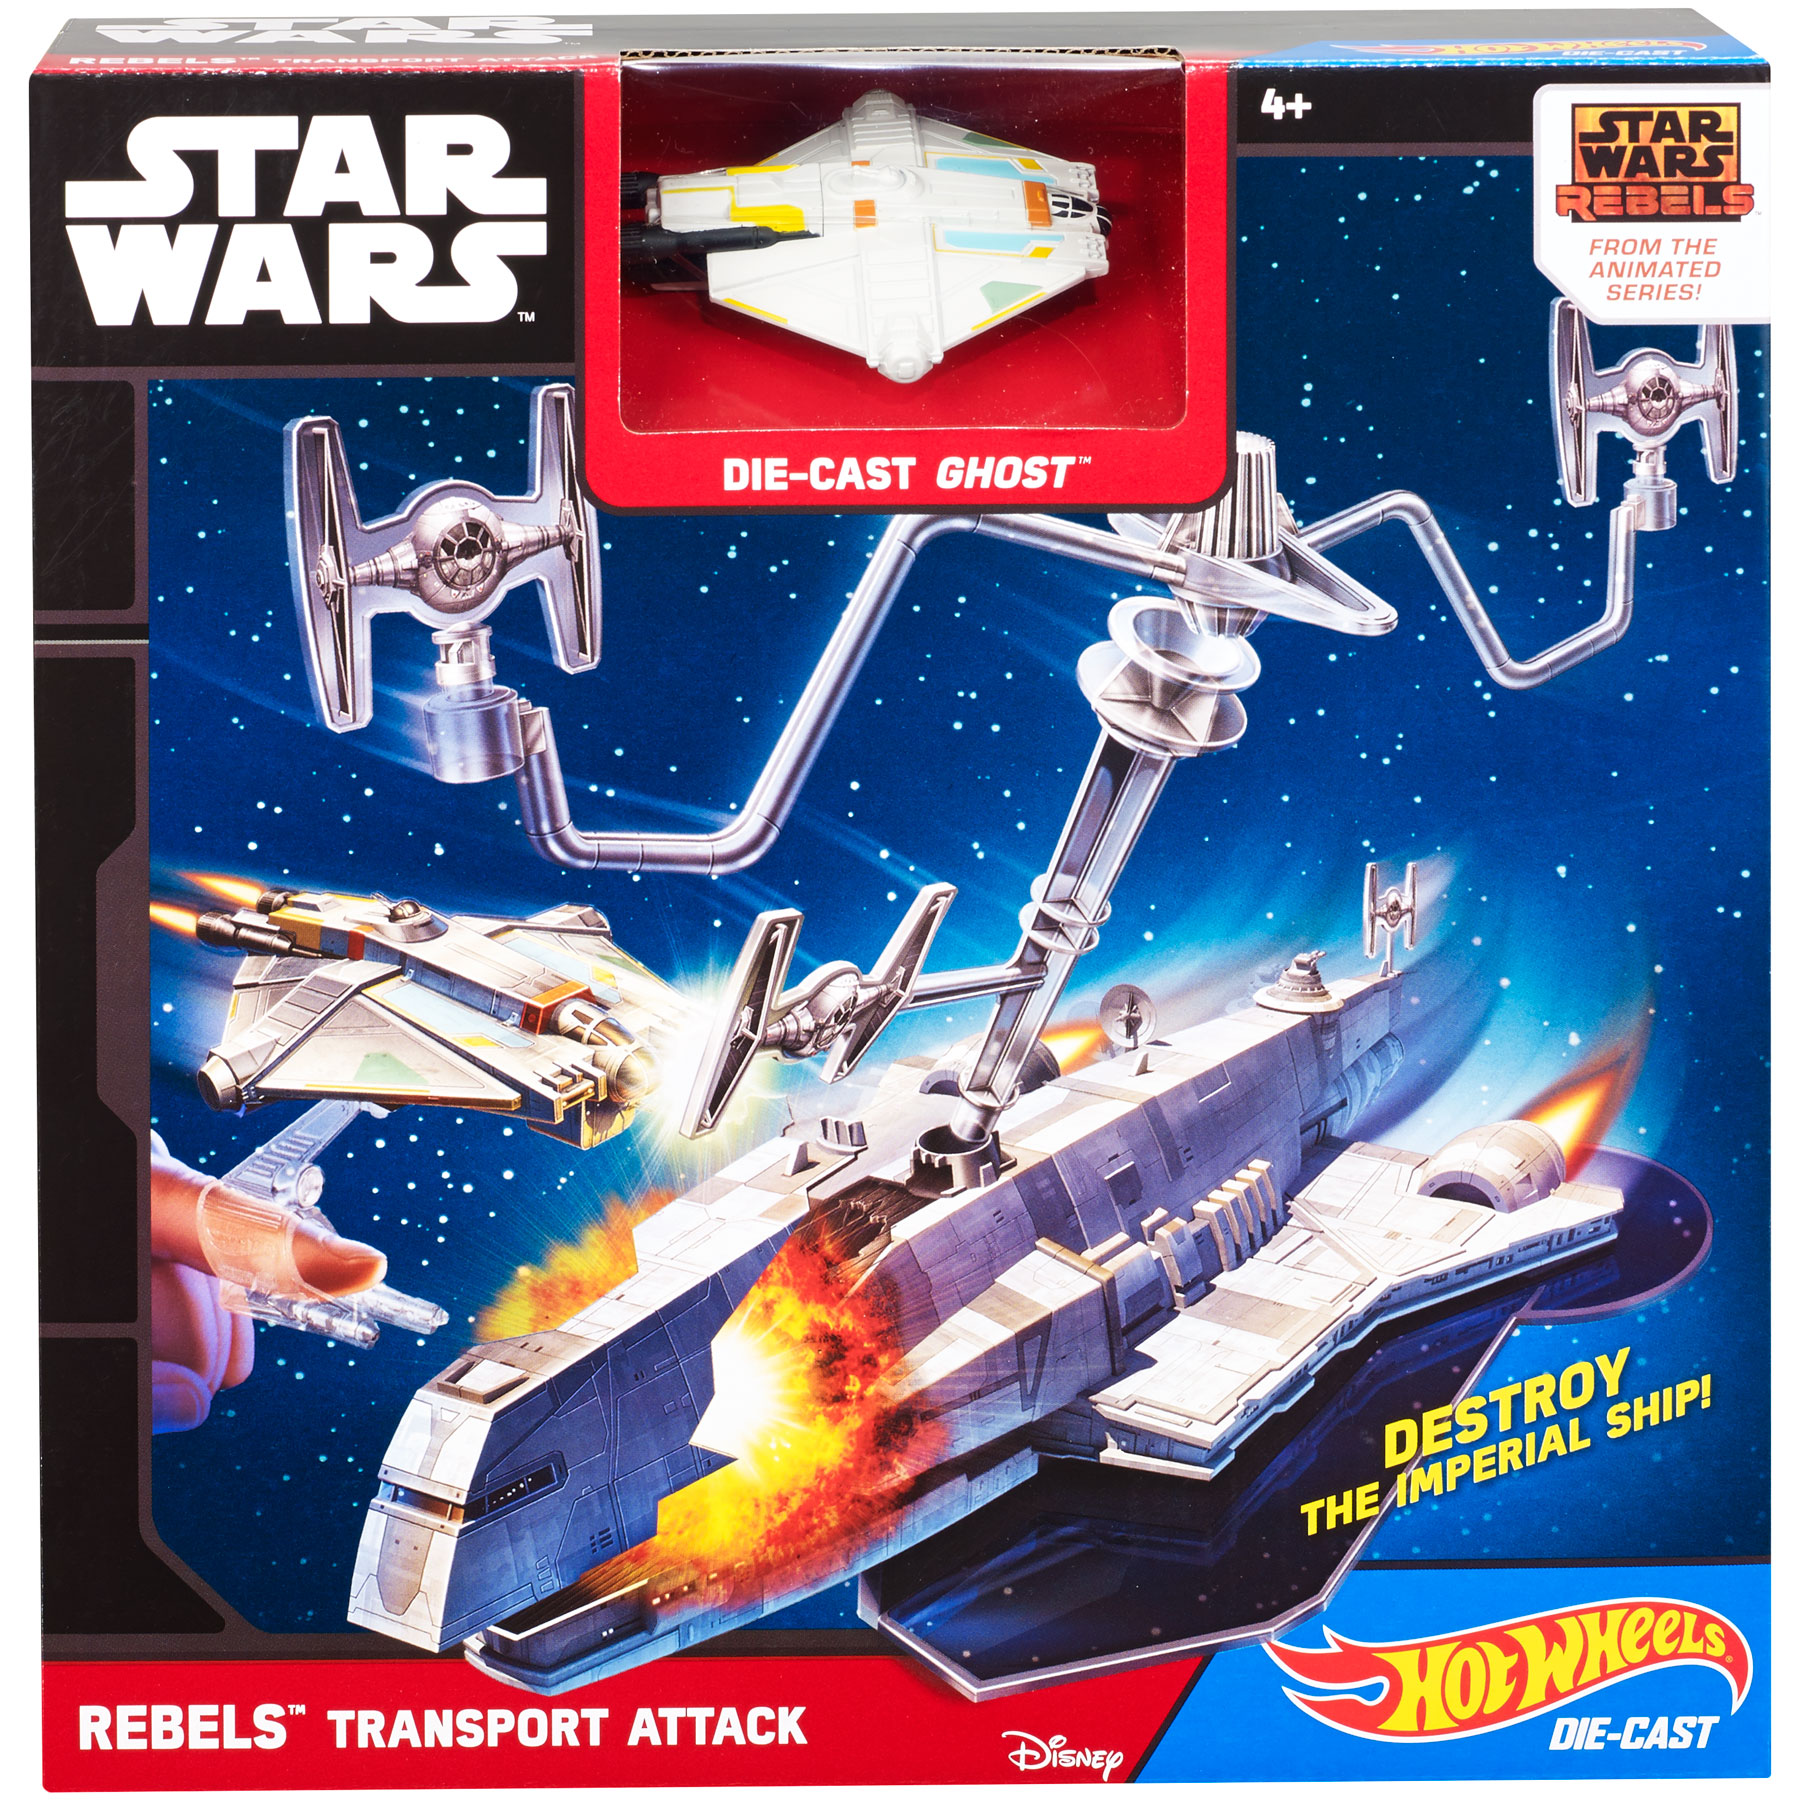 Hot Wheels Star Wars Rebels Transport Attack Playset   Toys & Games